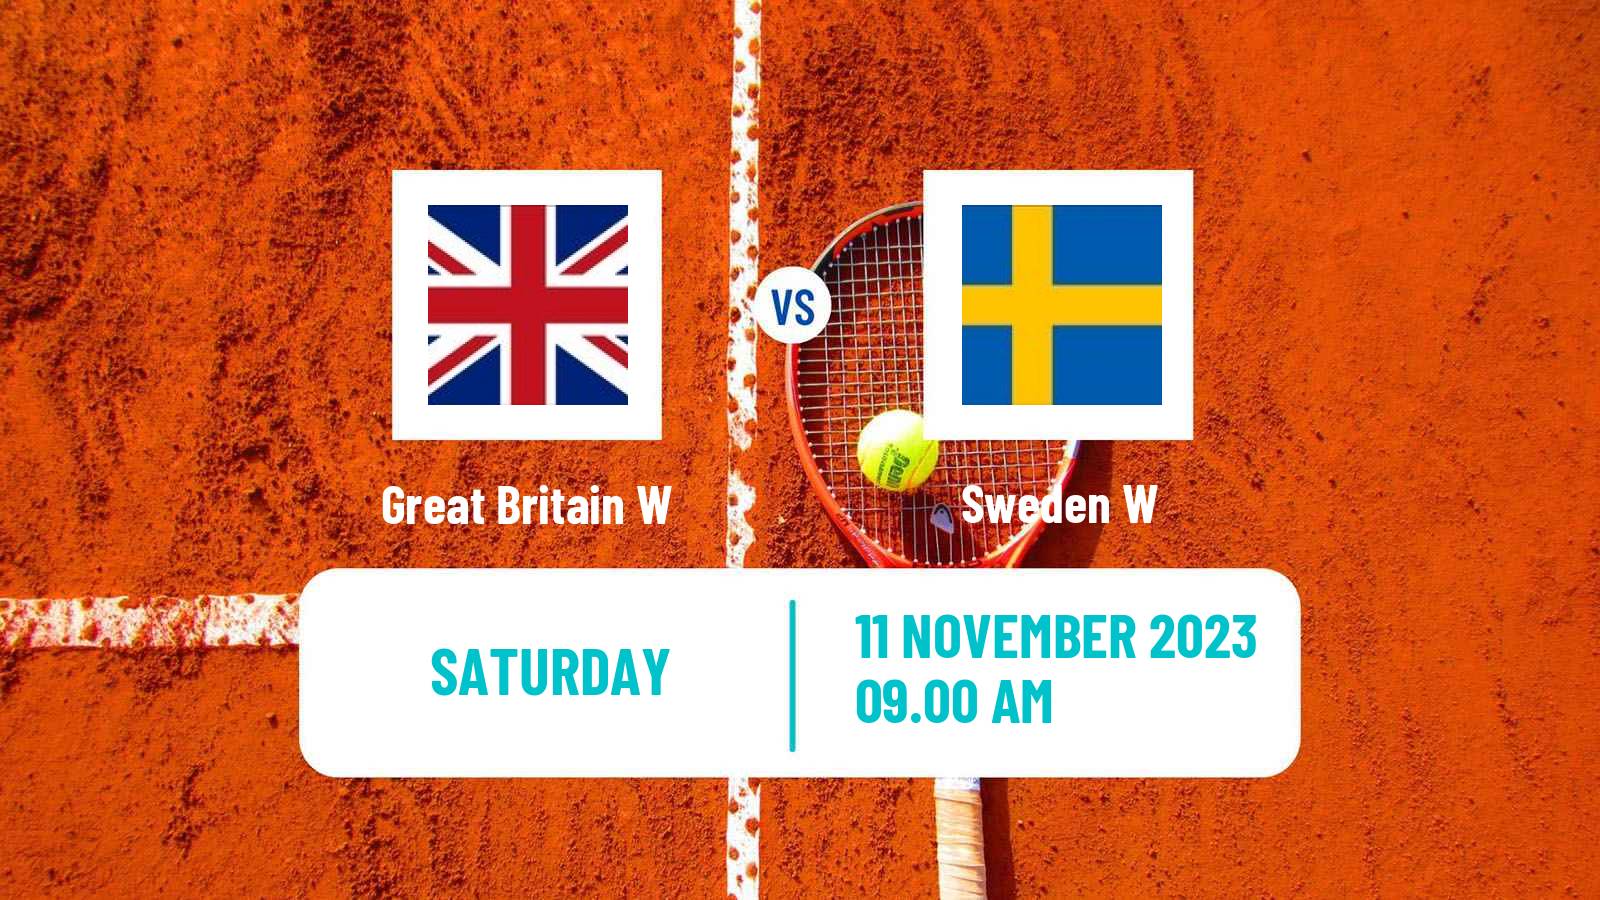 Tennis WTA Billie Jean King Cup World Group Teams Great Britain W - Sweden W